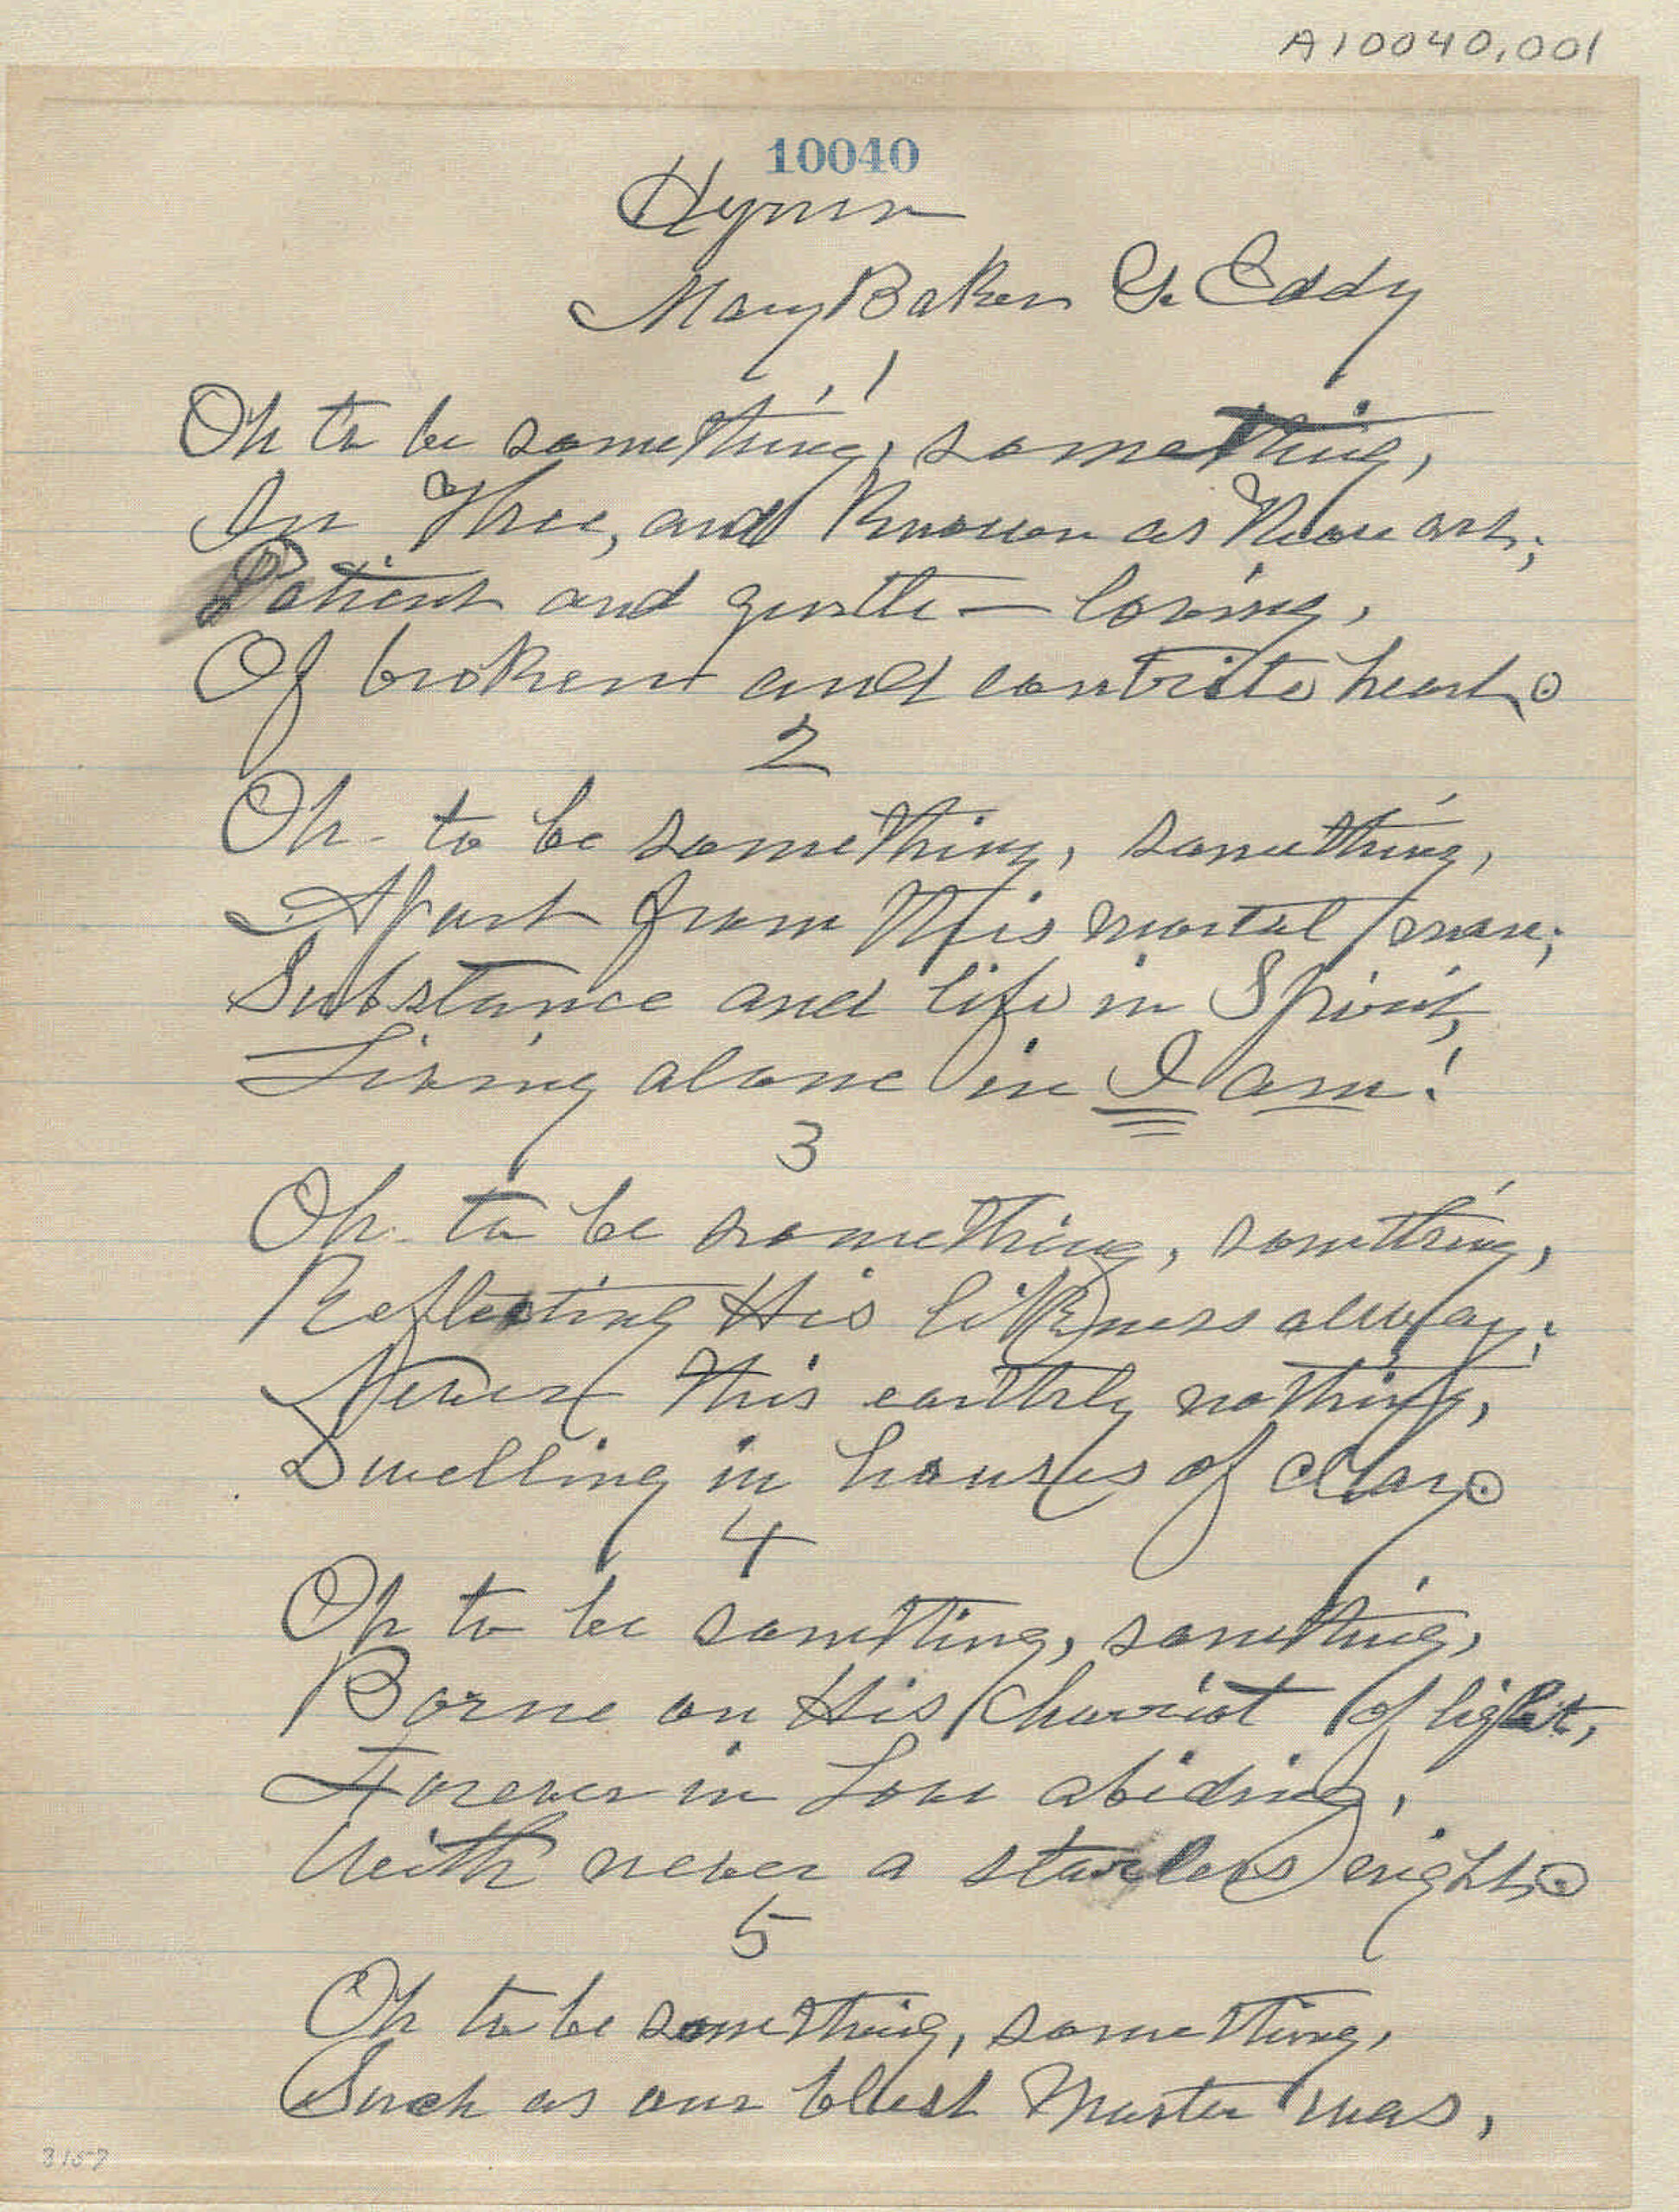 Eddy's transcription of poem handwritten in black ink on lined paper